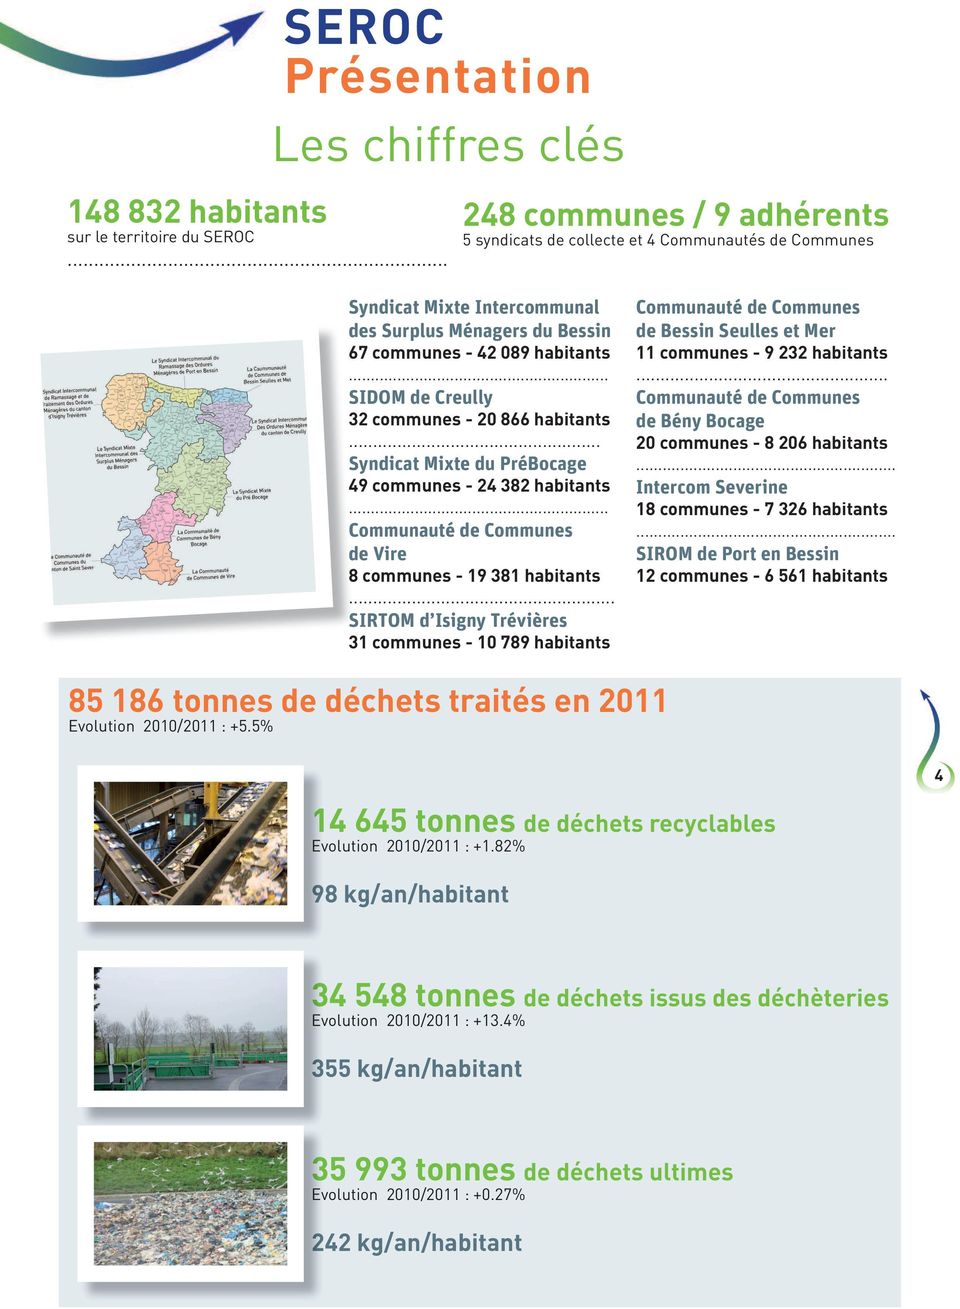 .. SIDOM de Creully 32communes - 20866 habitants... Syndicat Mixte du PréBocage 49communes - 24382 habitants... Communauté de Communes de Vire 8 communes - 19381 habitants.